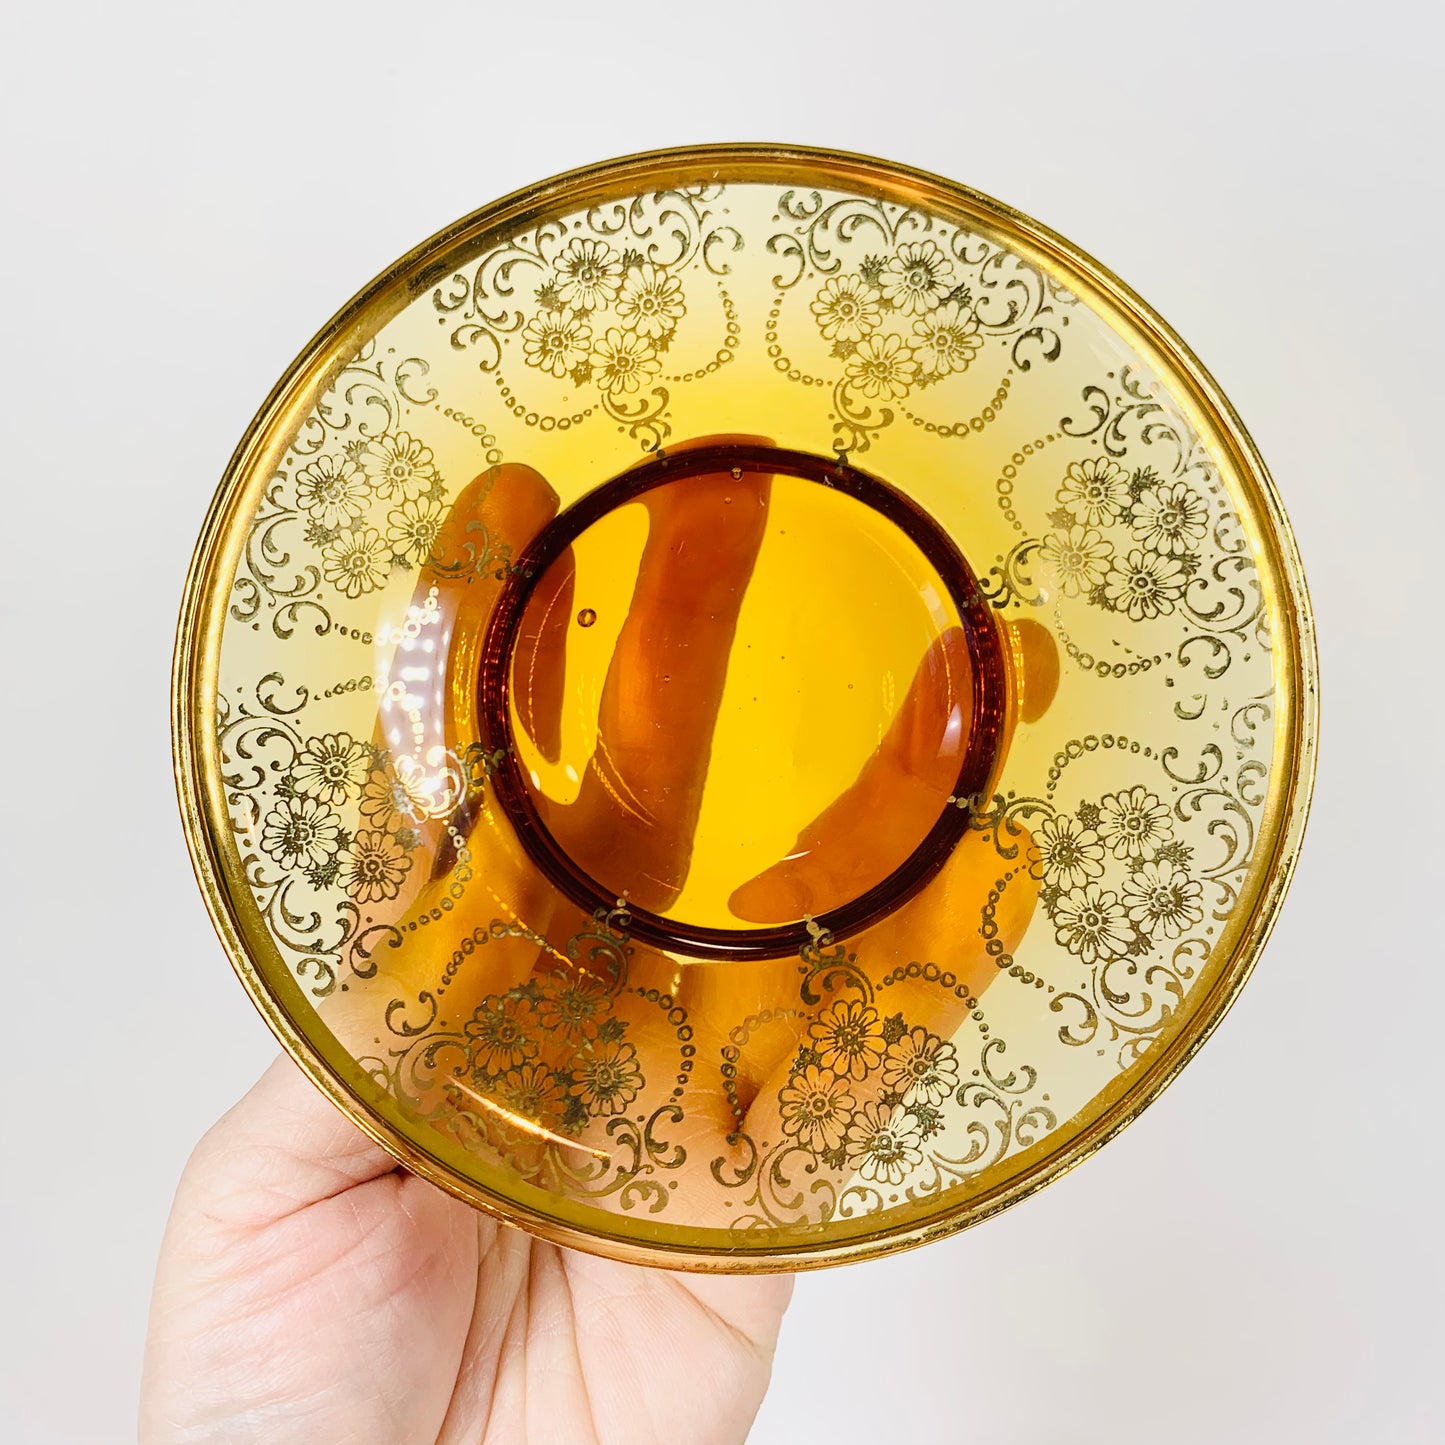 Antique Bohemian amber glass tea set with gold gilding